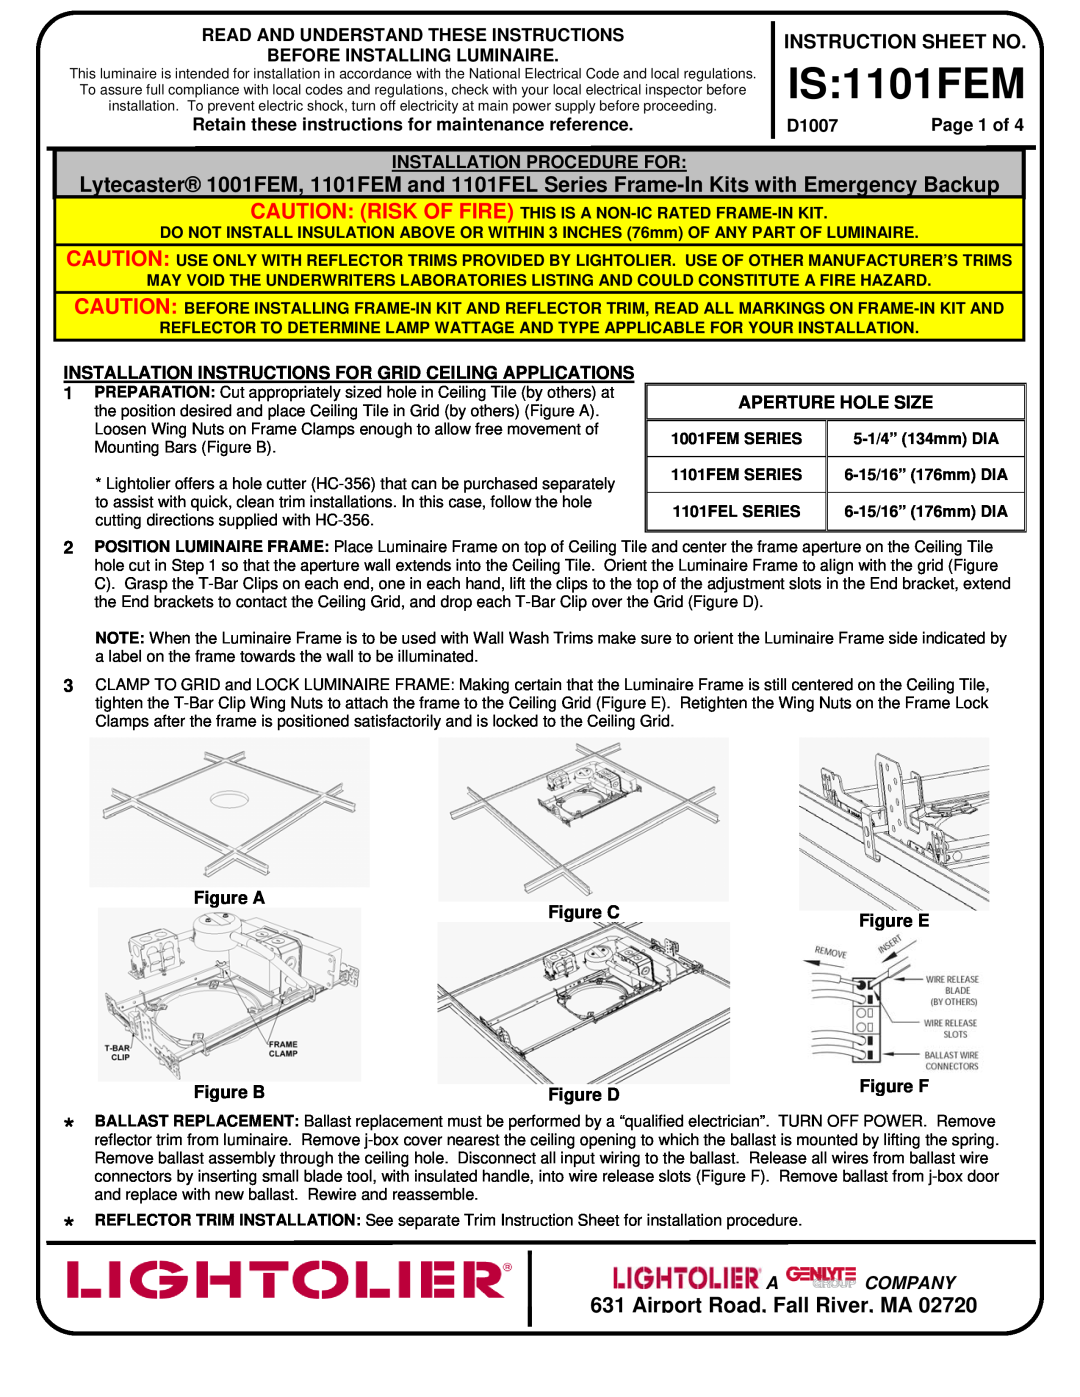 Lightolier 1101FEM Series installation instructions IS 1101FEM, Airport Road, Fall River, MA, Instruction Sheet No 